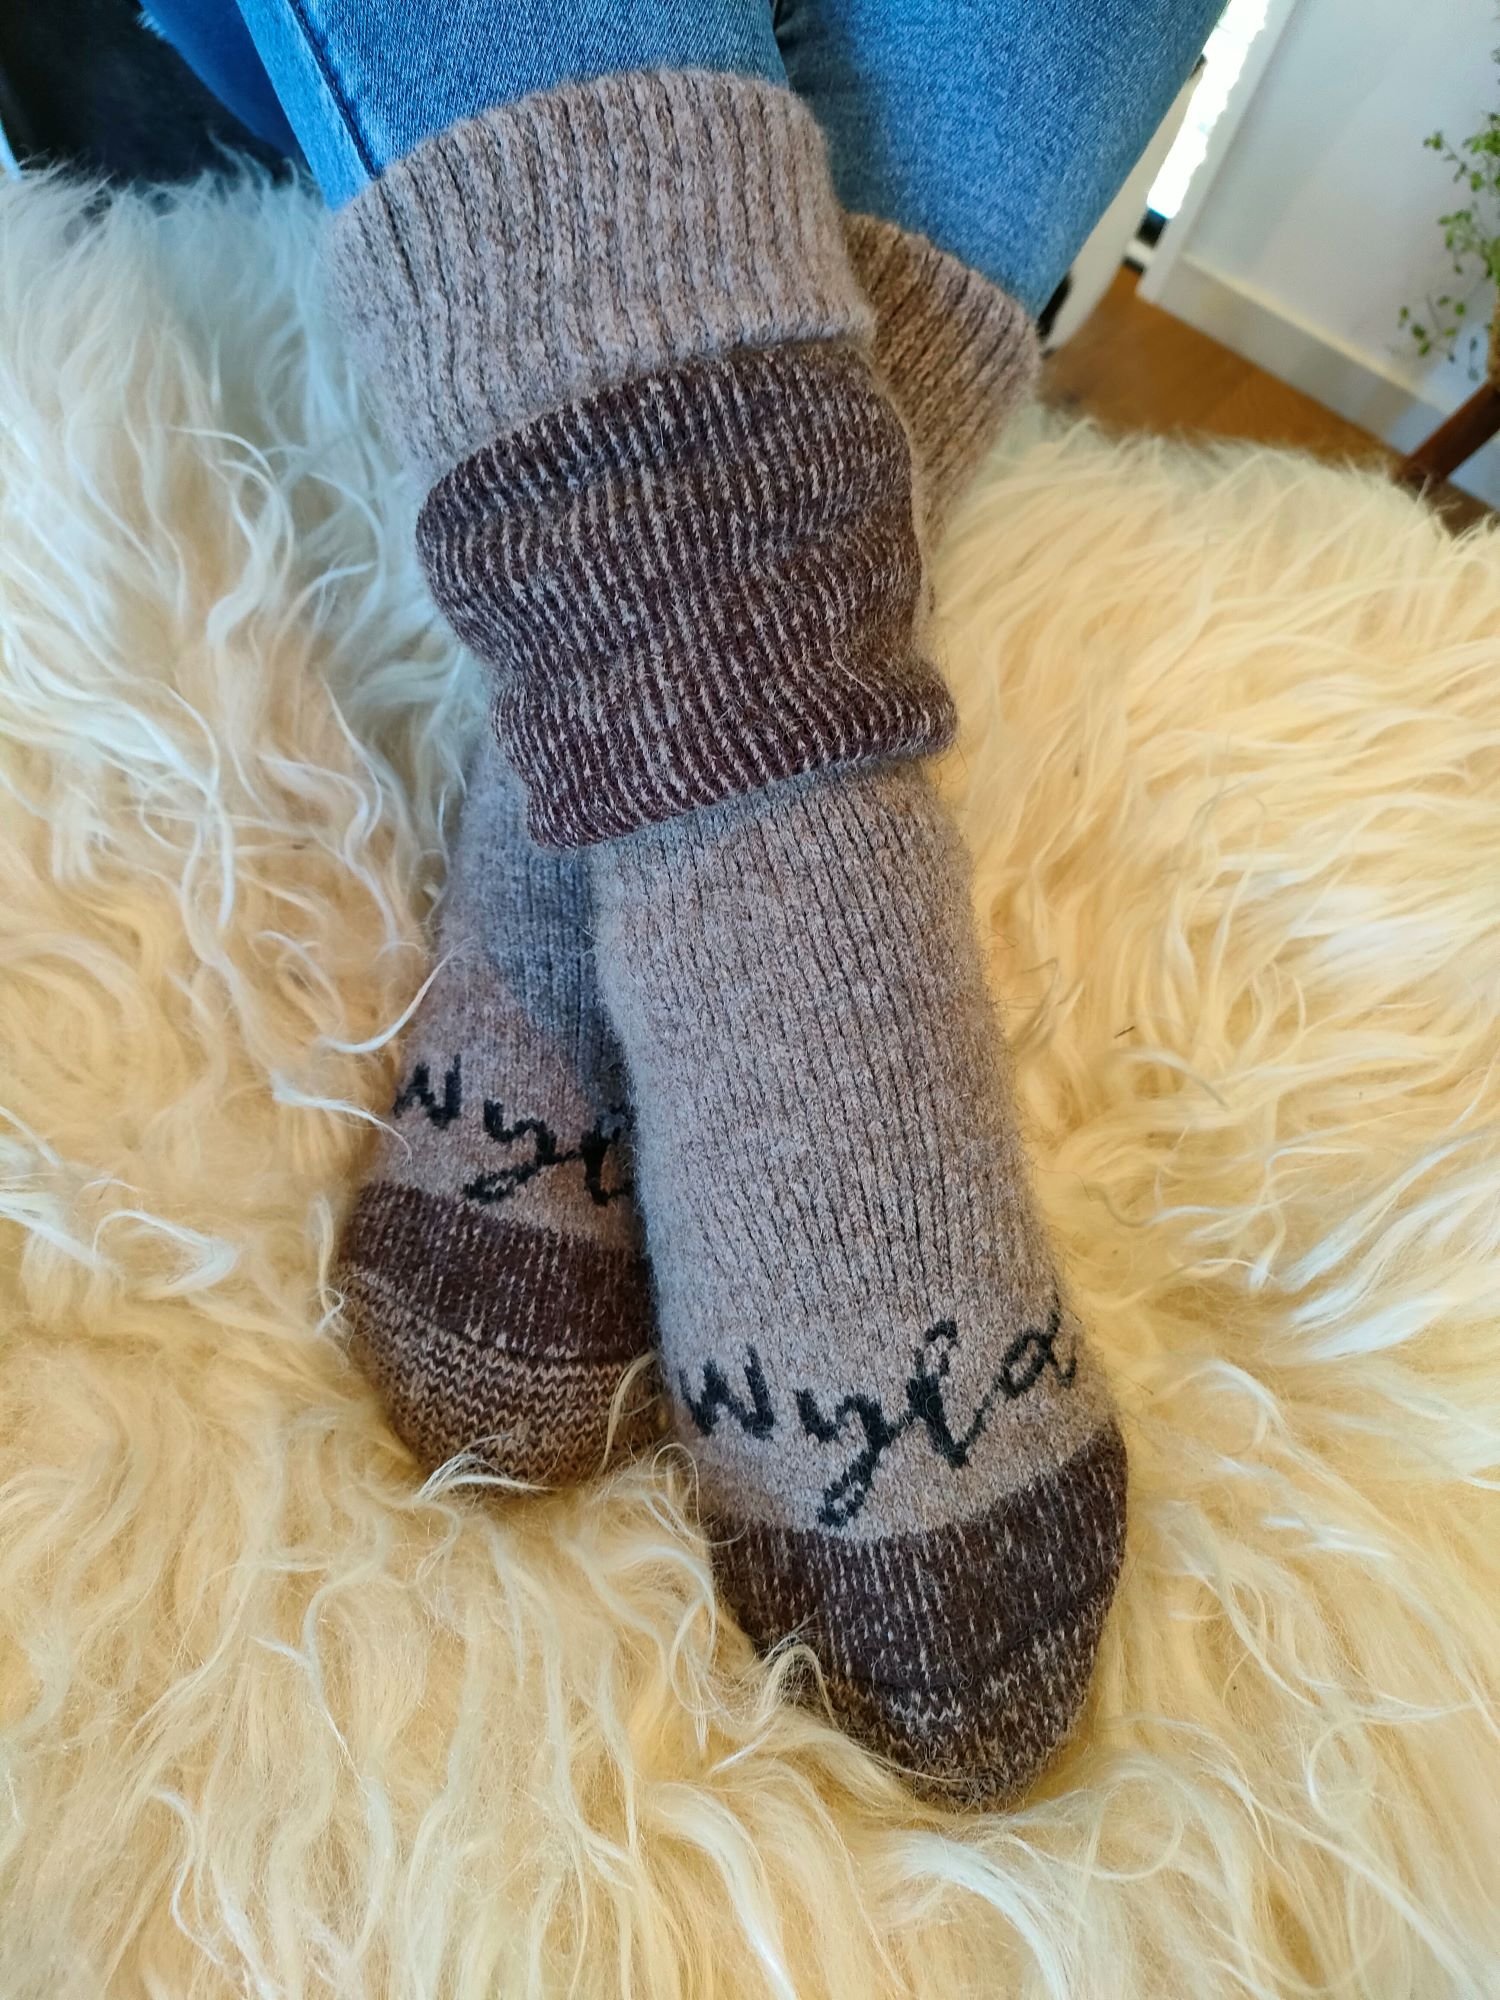 NZ Made Wyld Wool Possum Boot Socks: The cosiest socks you've ever